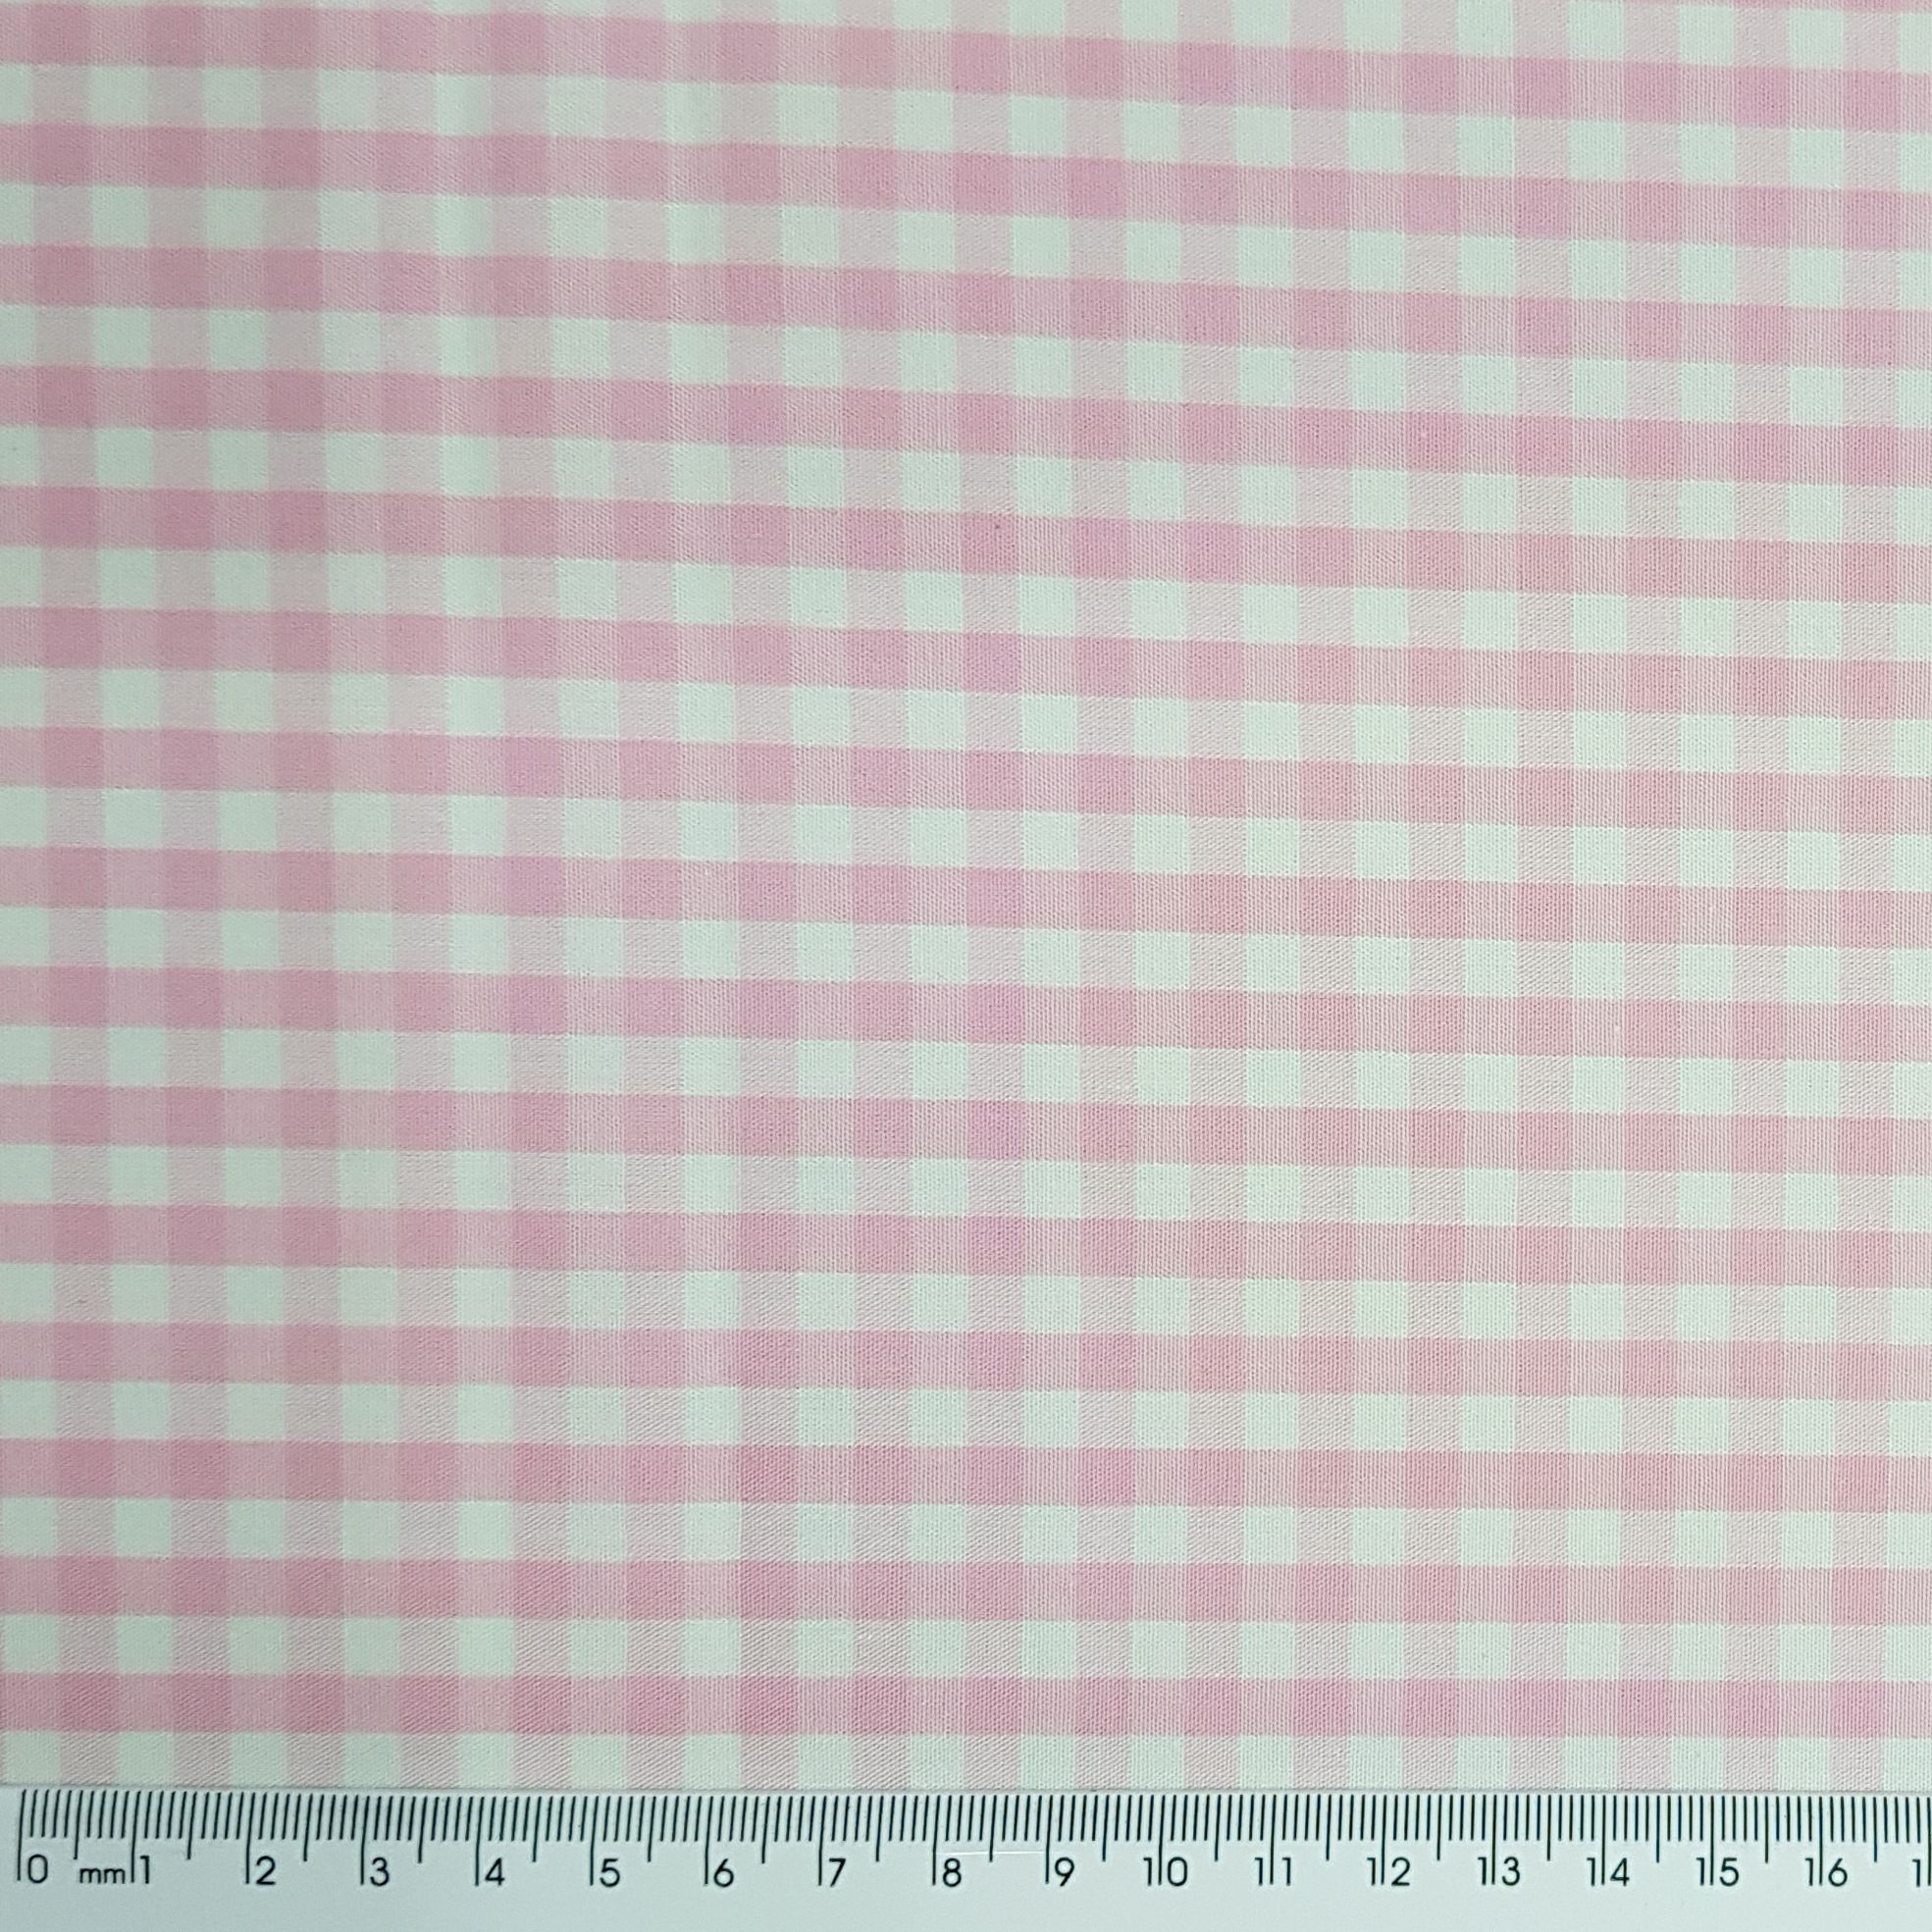 Tecido Tricoline Estampado Xadrez Branco e Rosa Pink - 50cm x 1